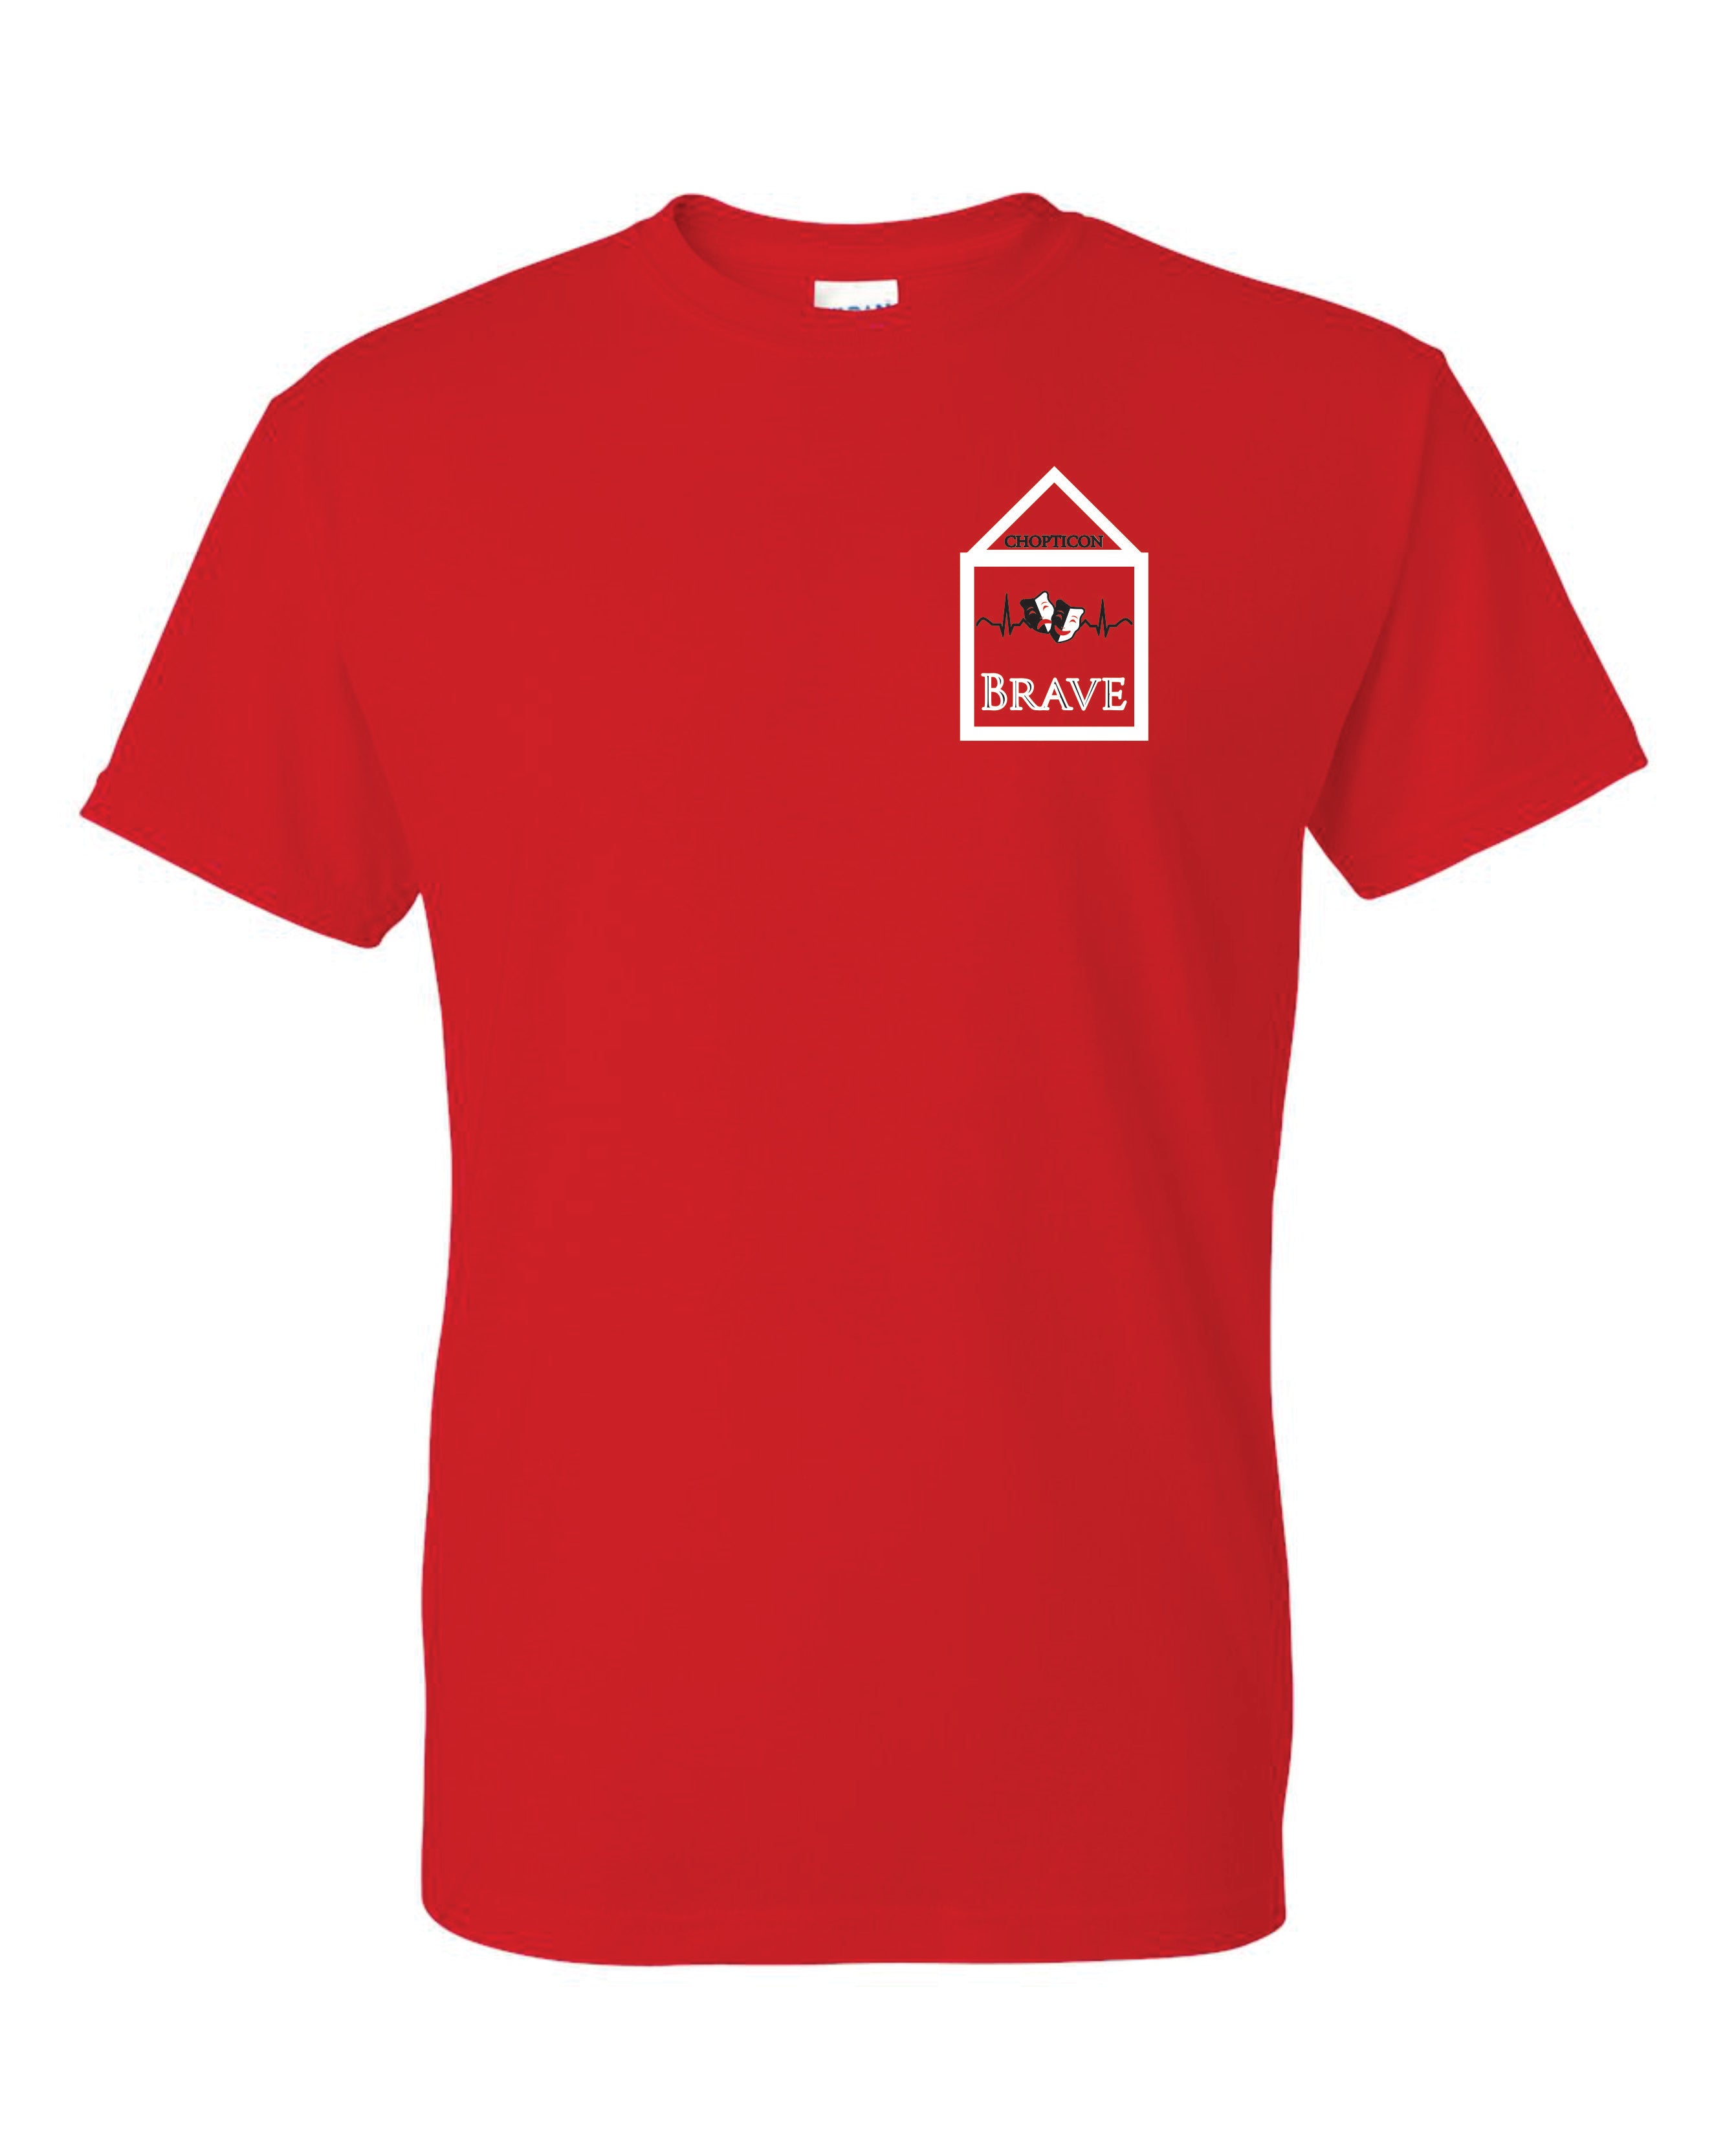 Chopticon Theater Short Sleeve T-Shirt 50/50 Blend Adult